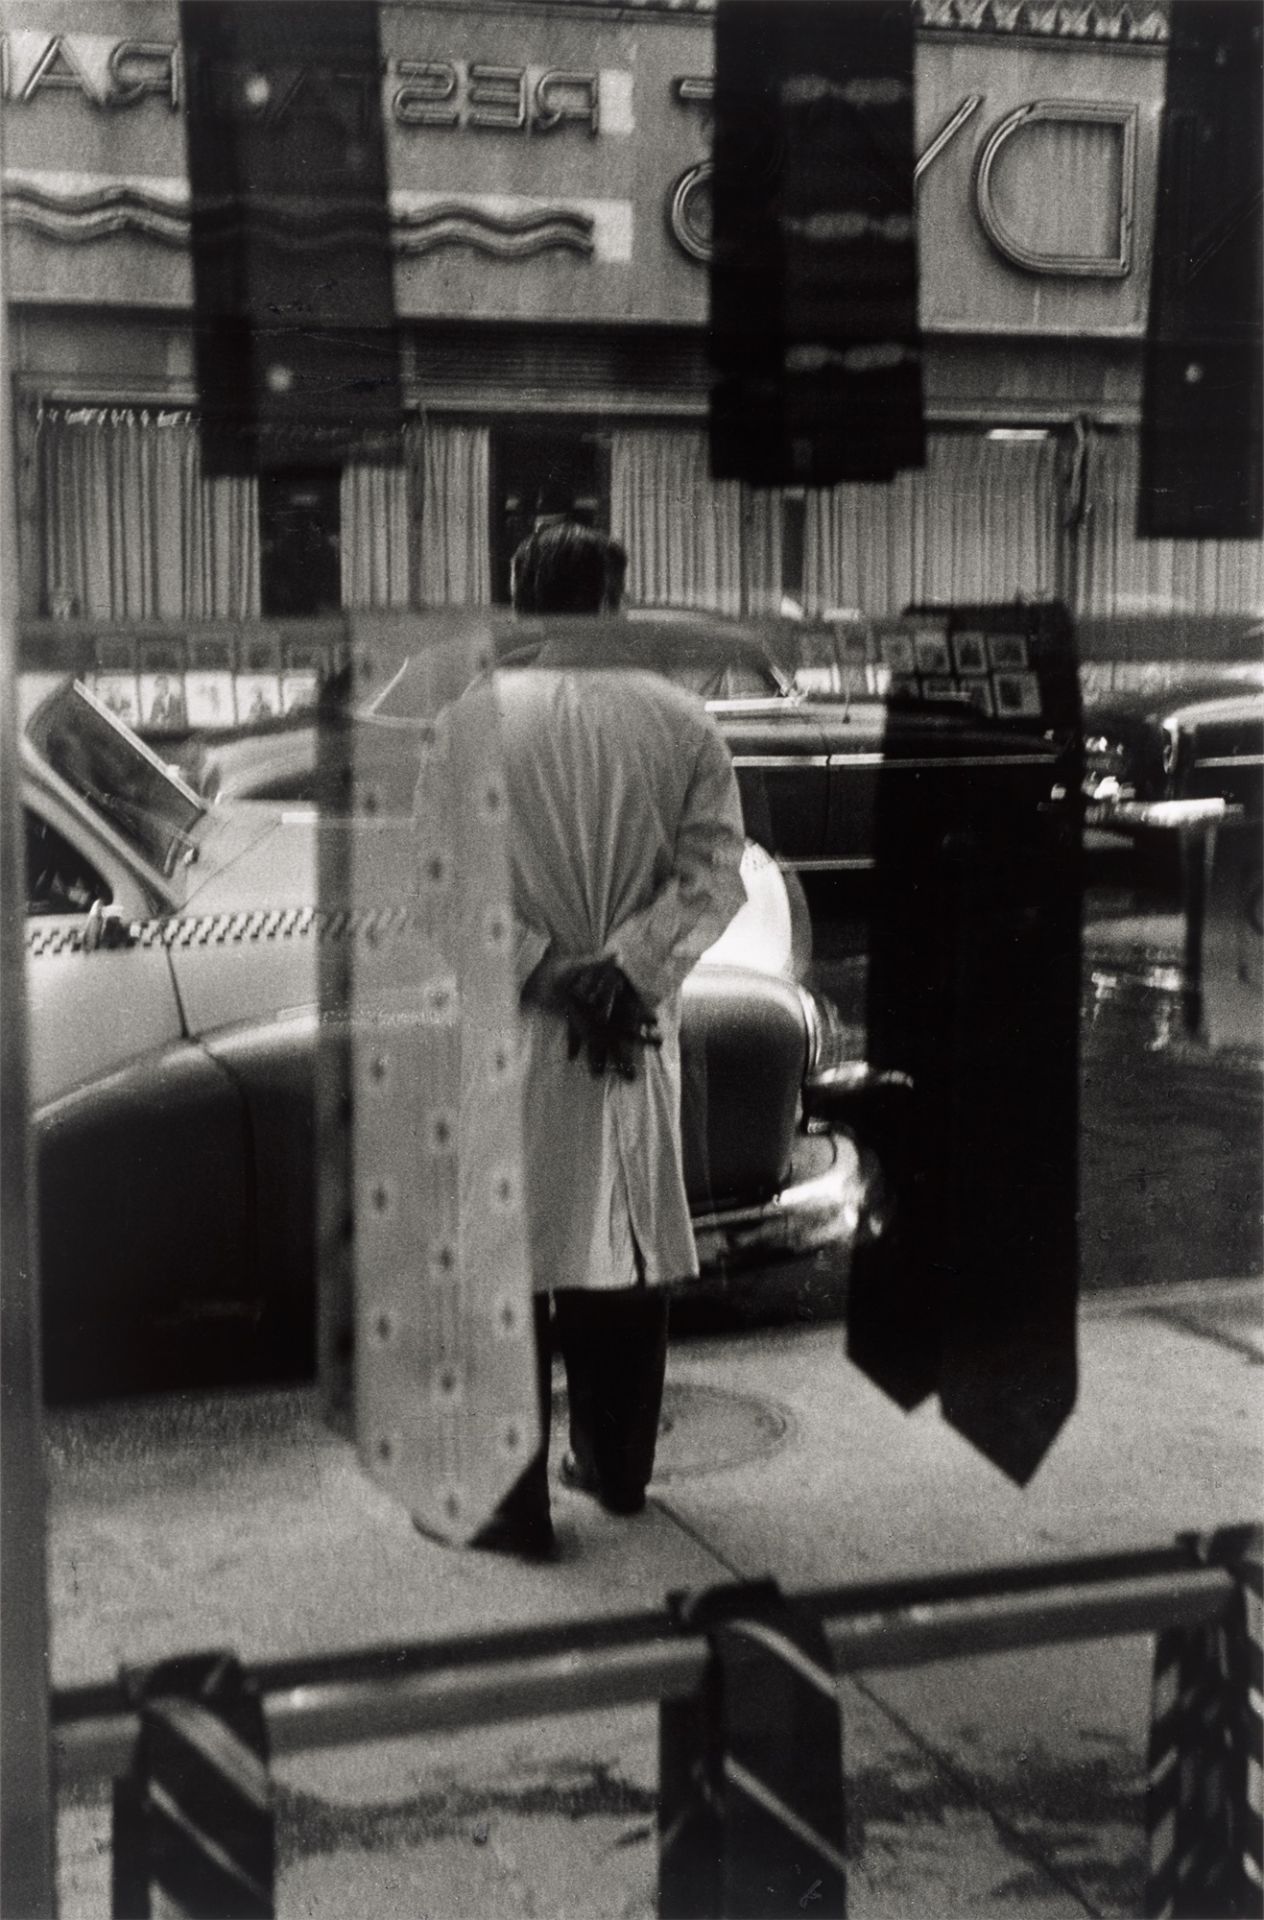 Louis Stettner. ”On Madison Avenue, N.Y.C”. 1954